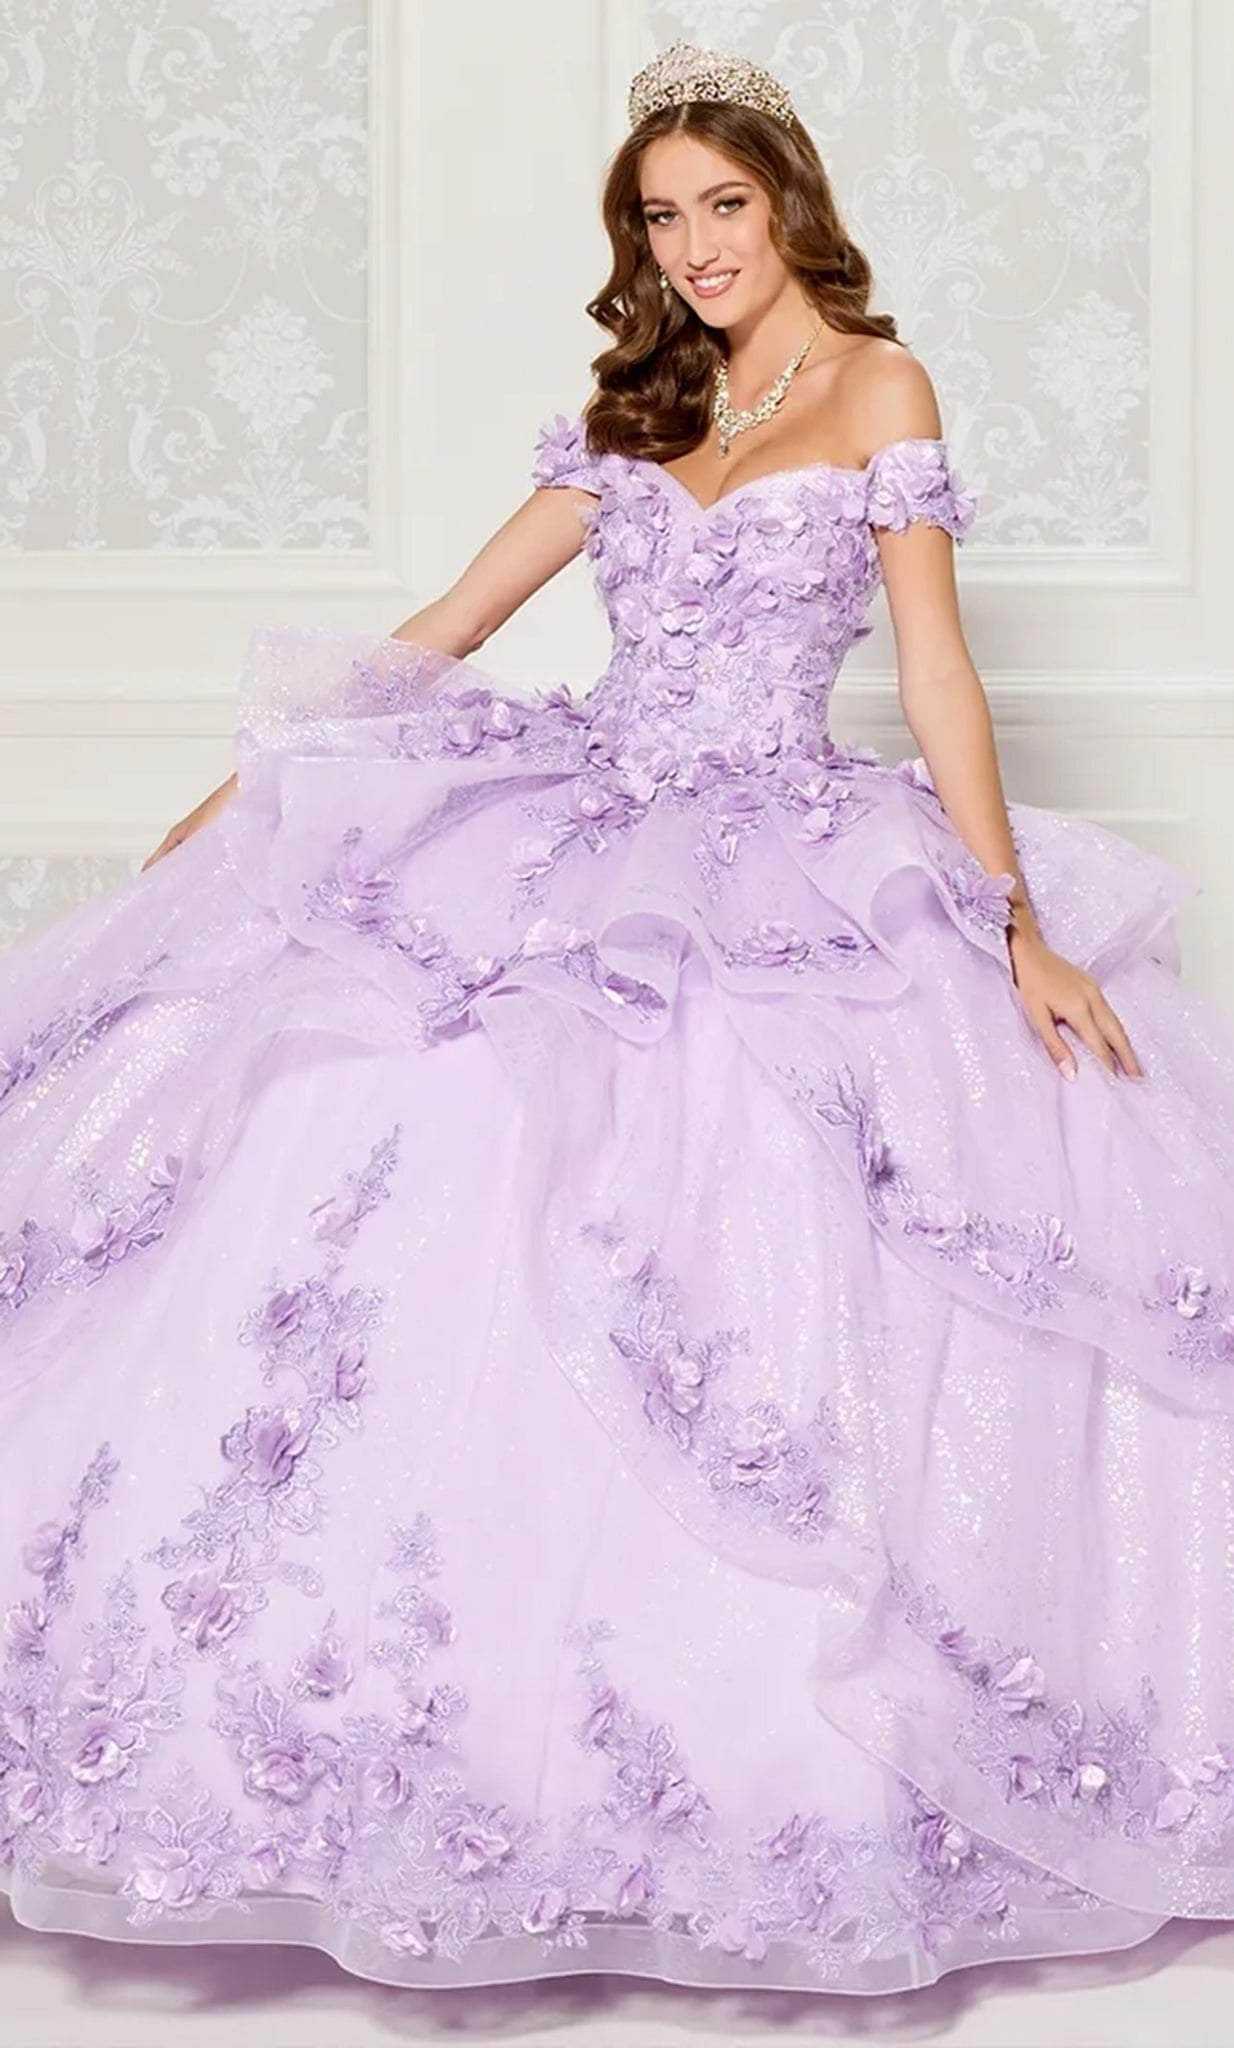 Princesa by Ariana Vara, Princesa by Ariana Vara PR30113 - Sweetheart Appliqued Ballgown